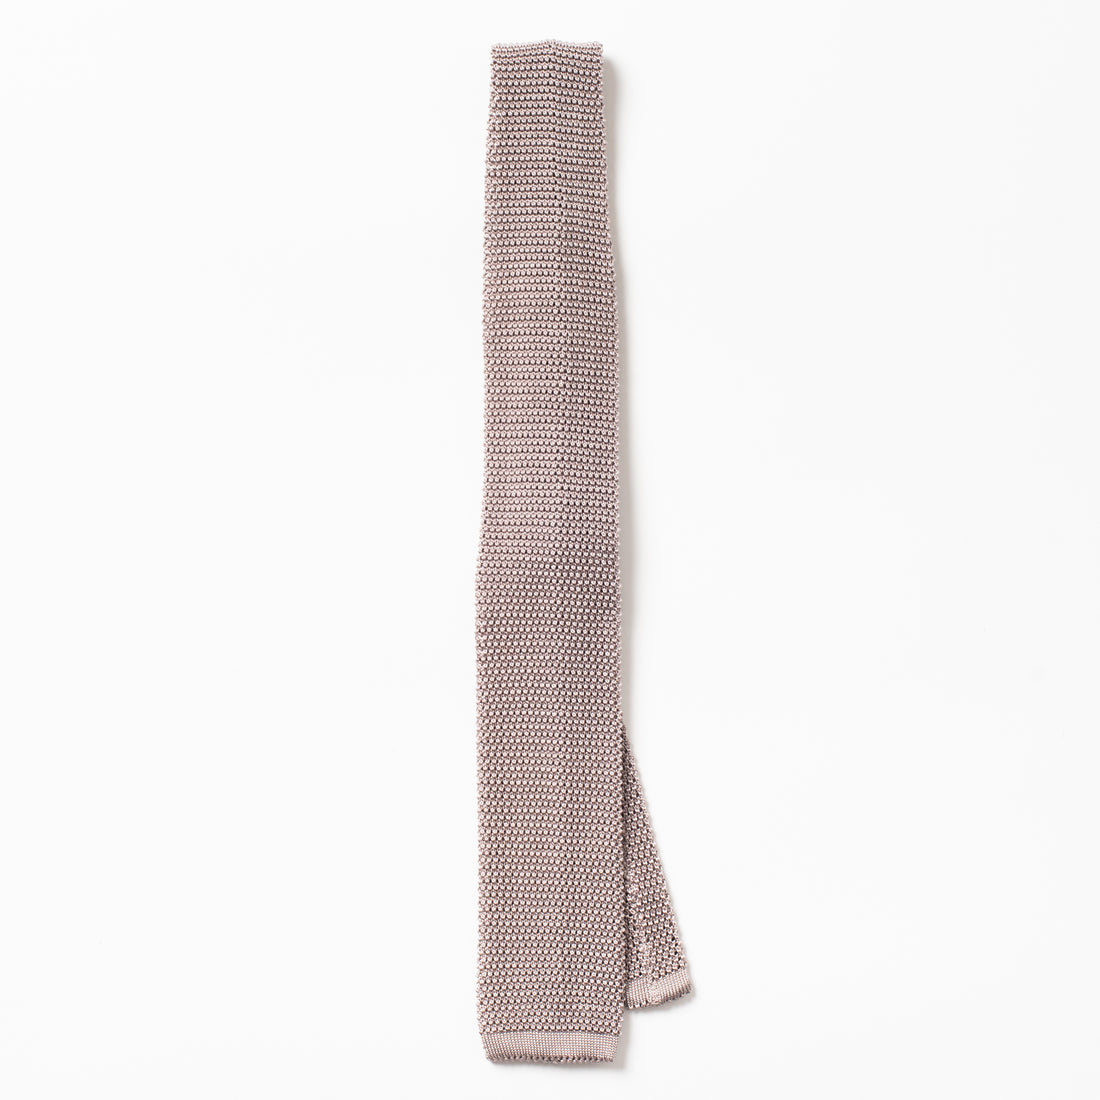 Bryceland’s Silk Knit Tie Silver